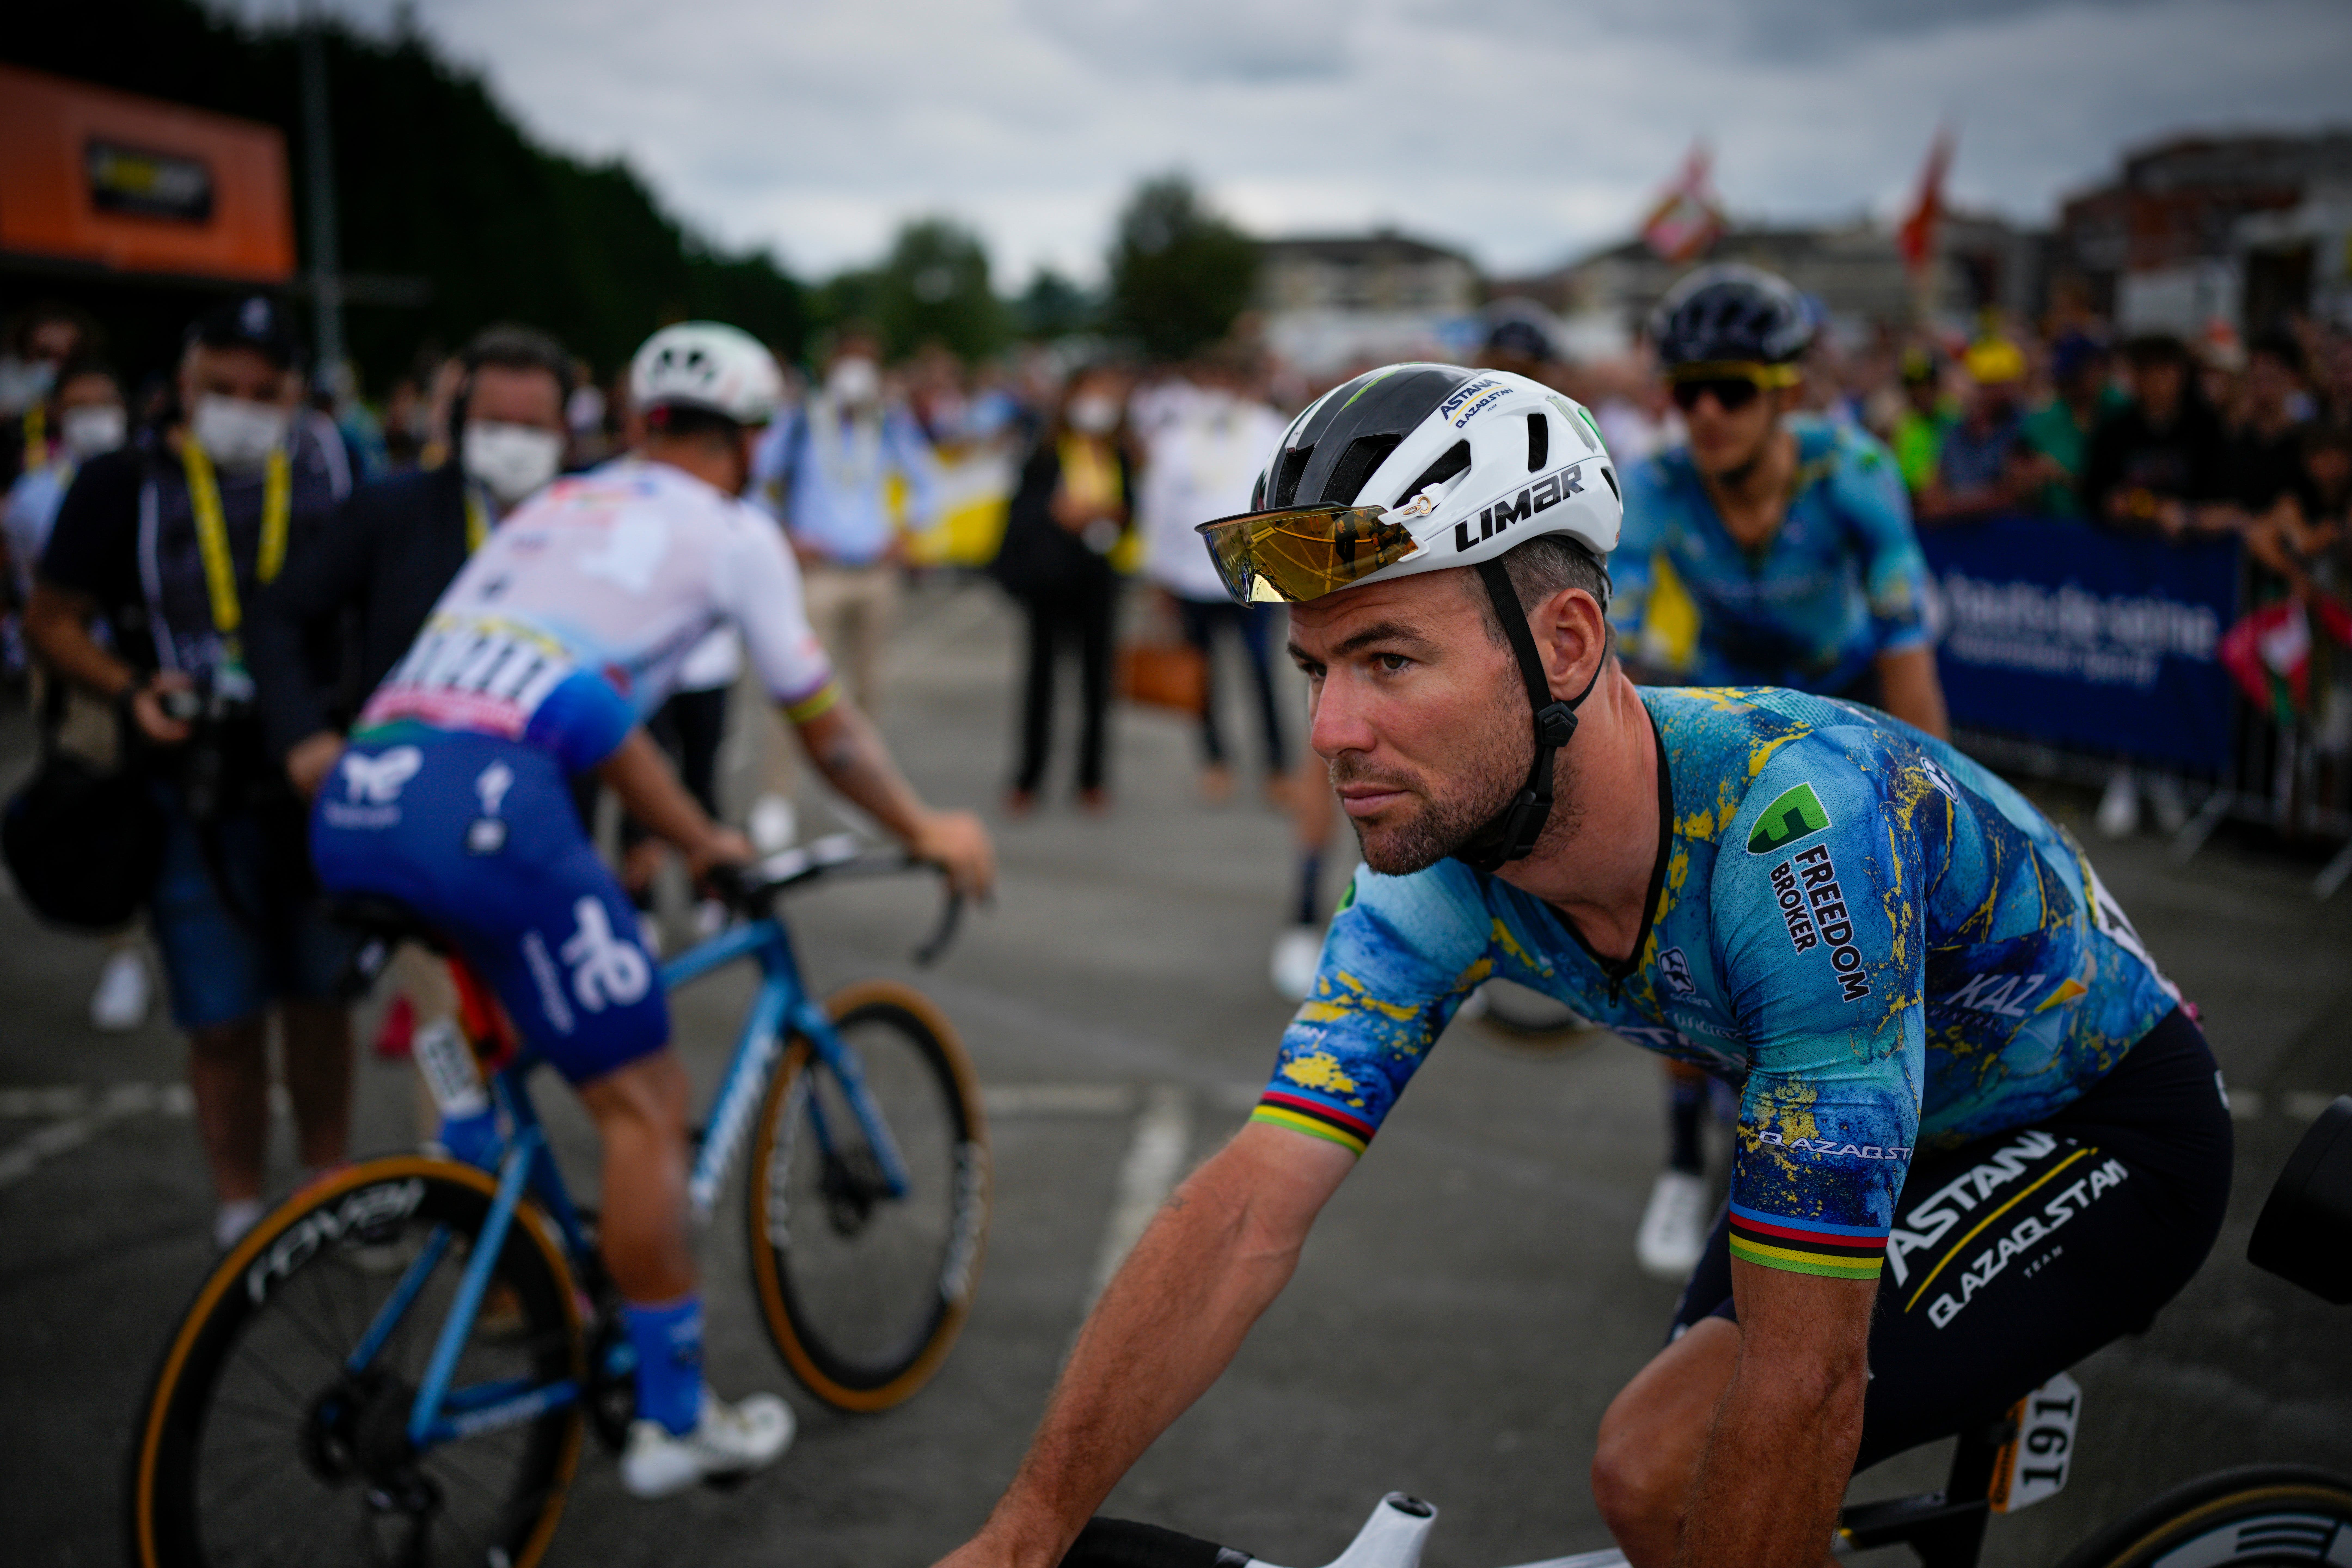 Mark Cavendish crashed out of last year’s Tour de France